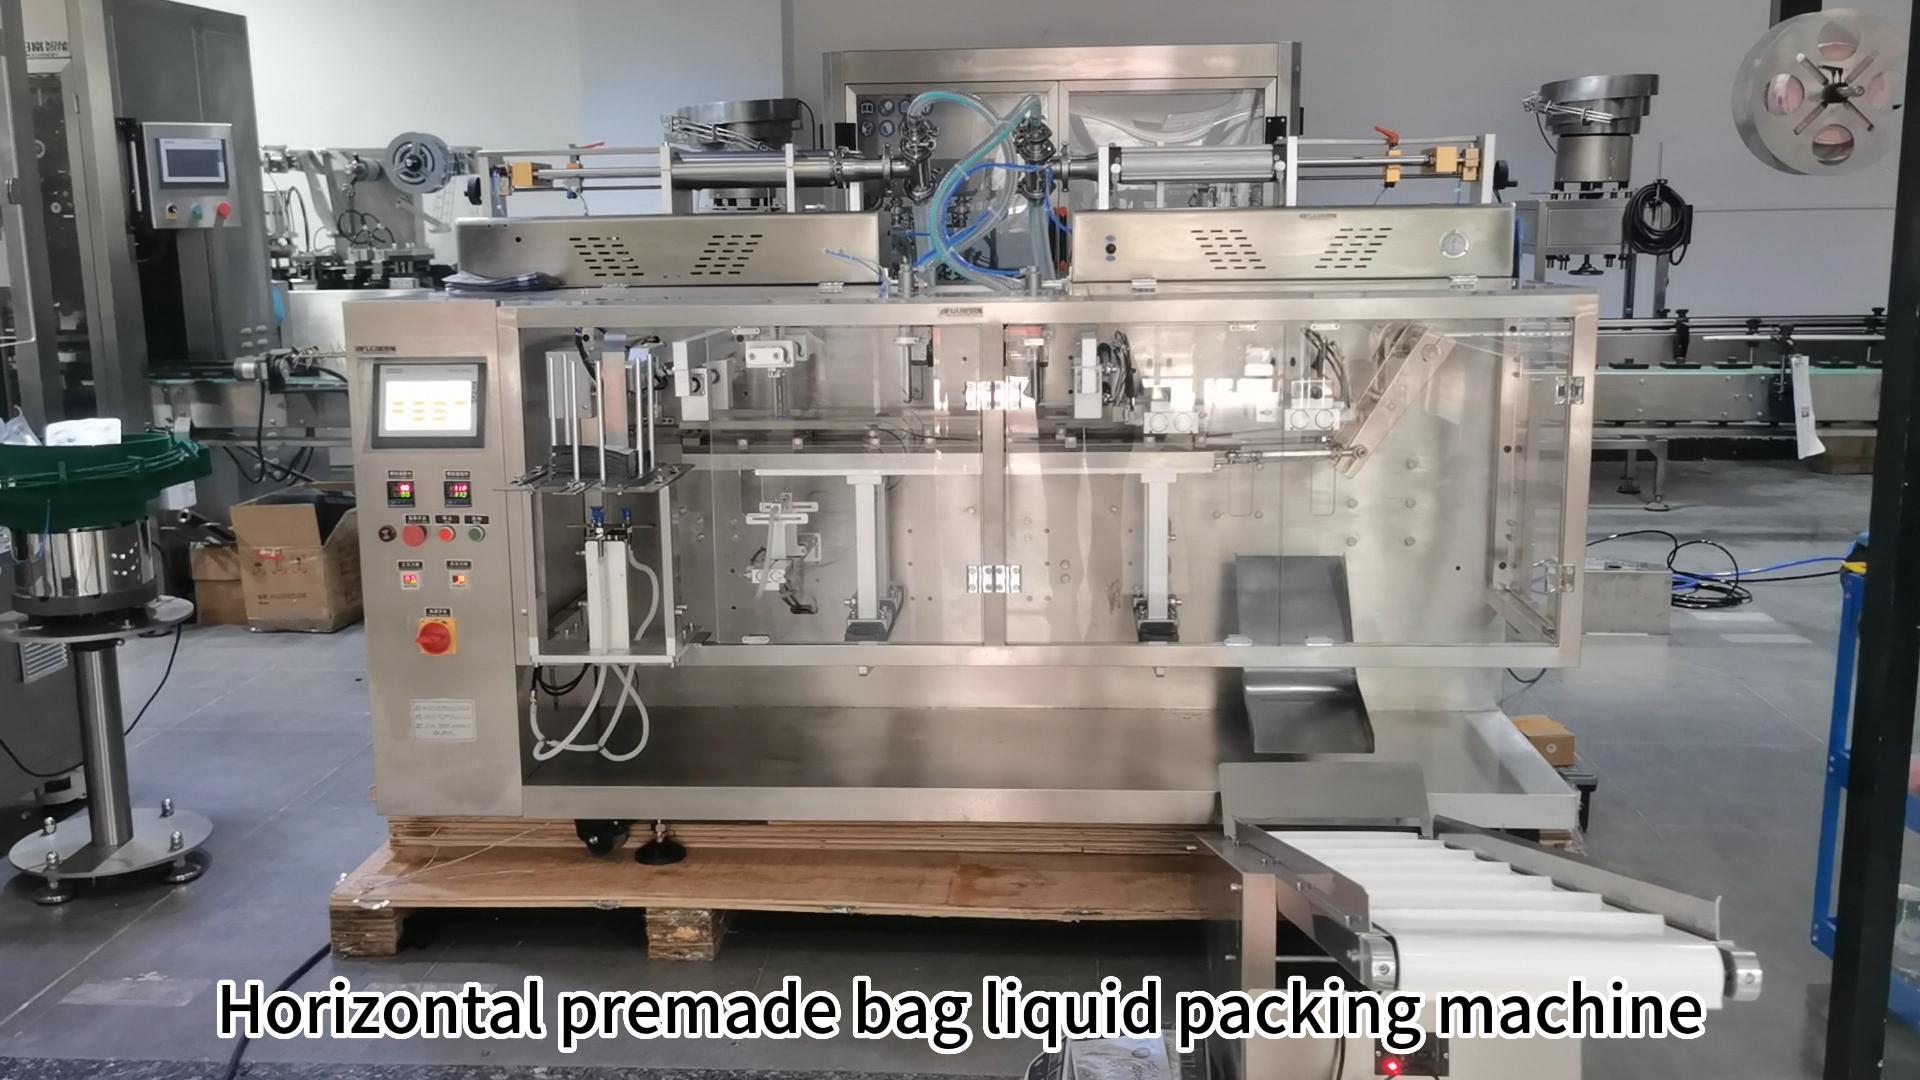 Test video of horizontal pre-made bag liquid packing machine